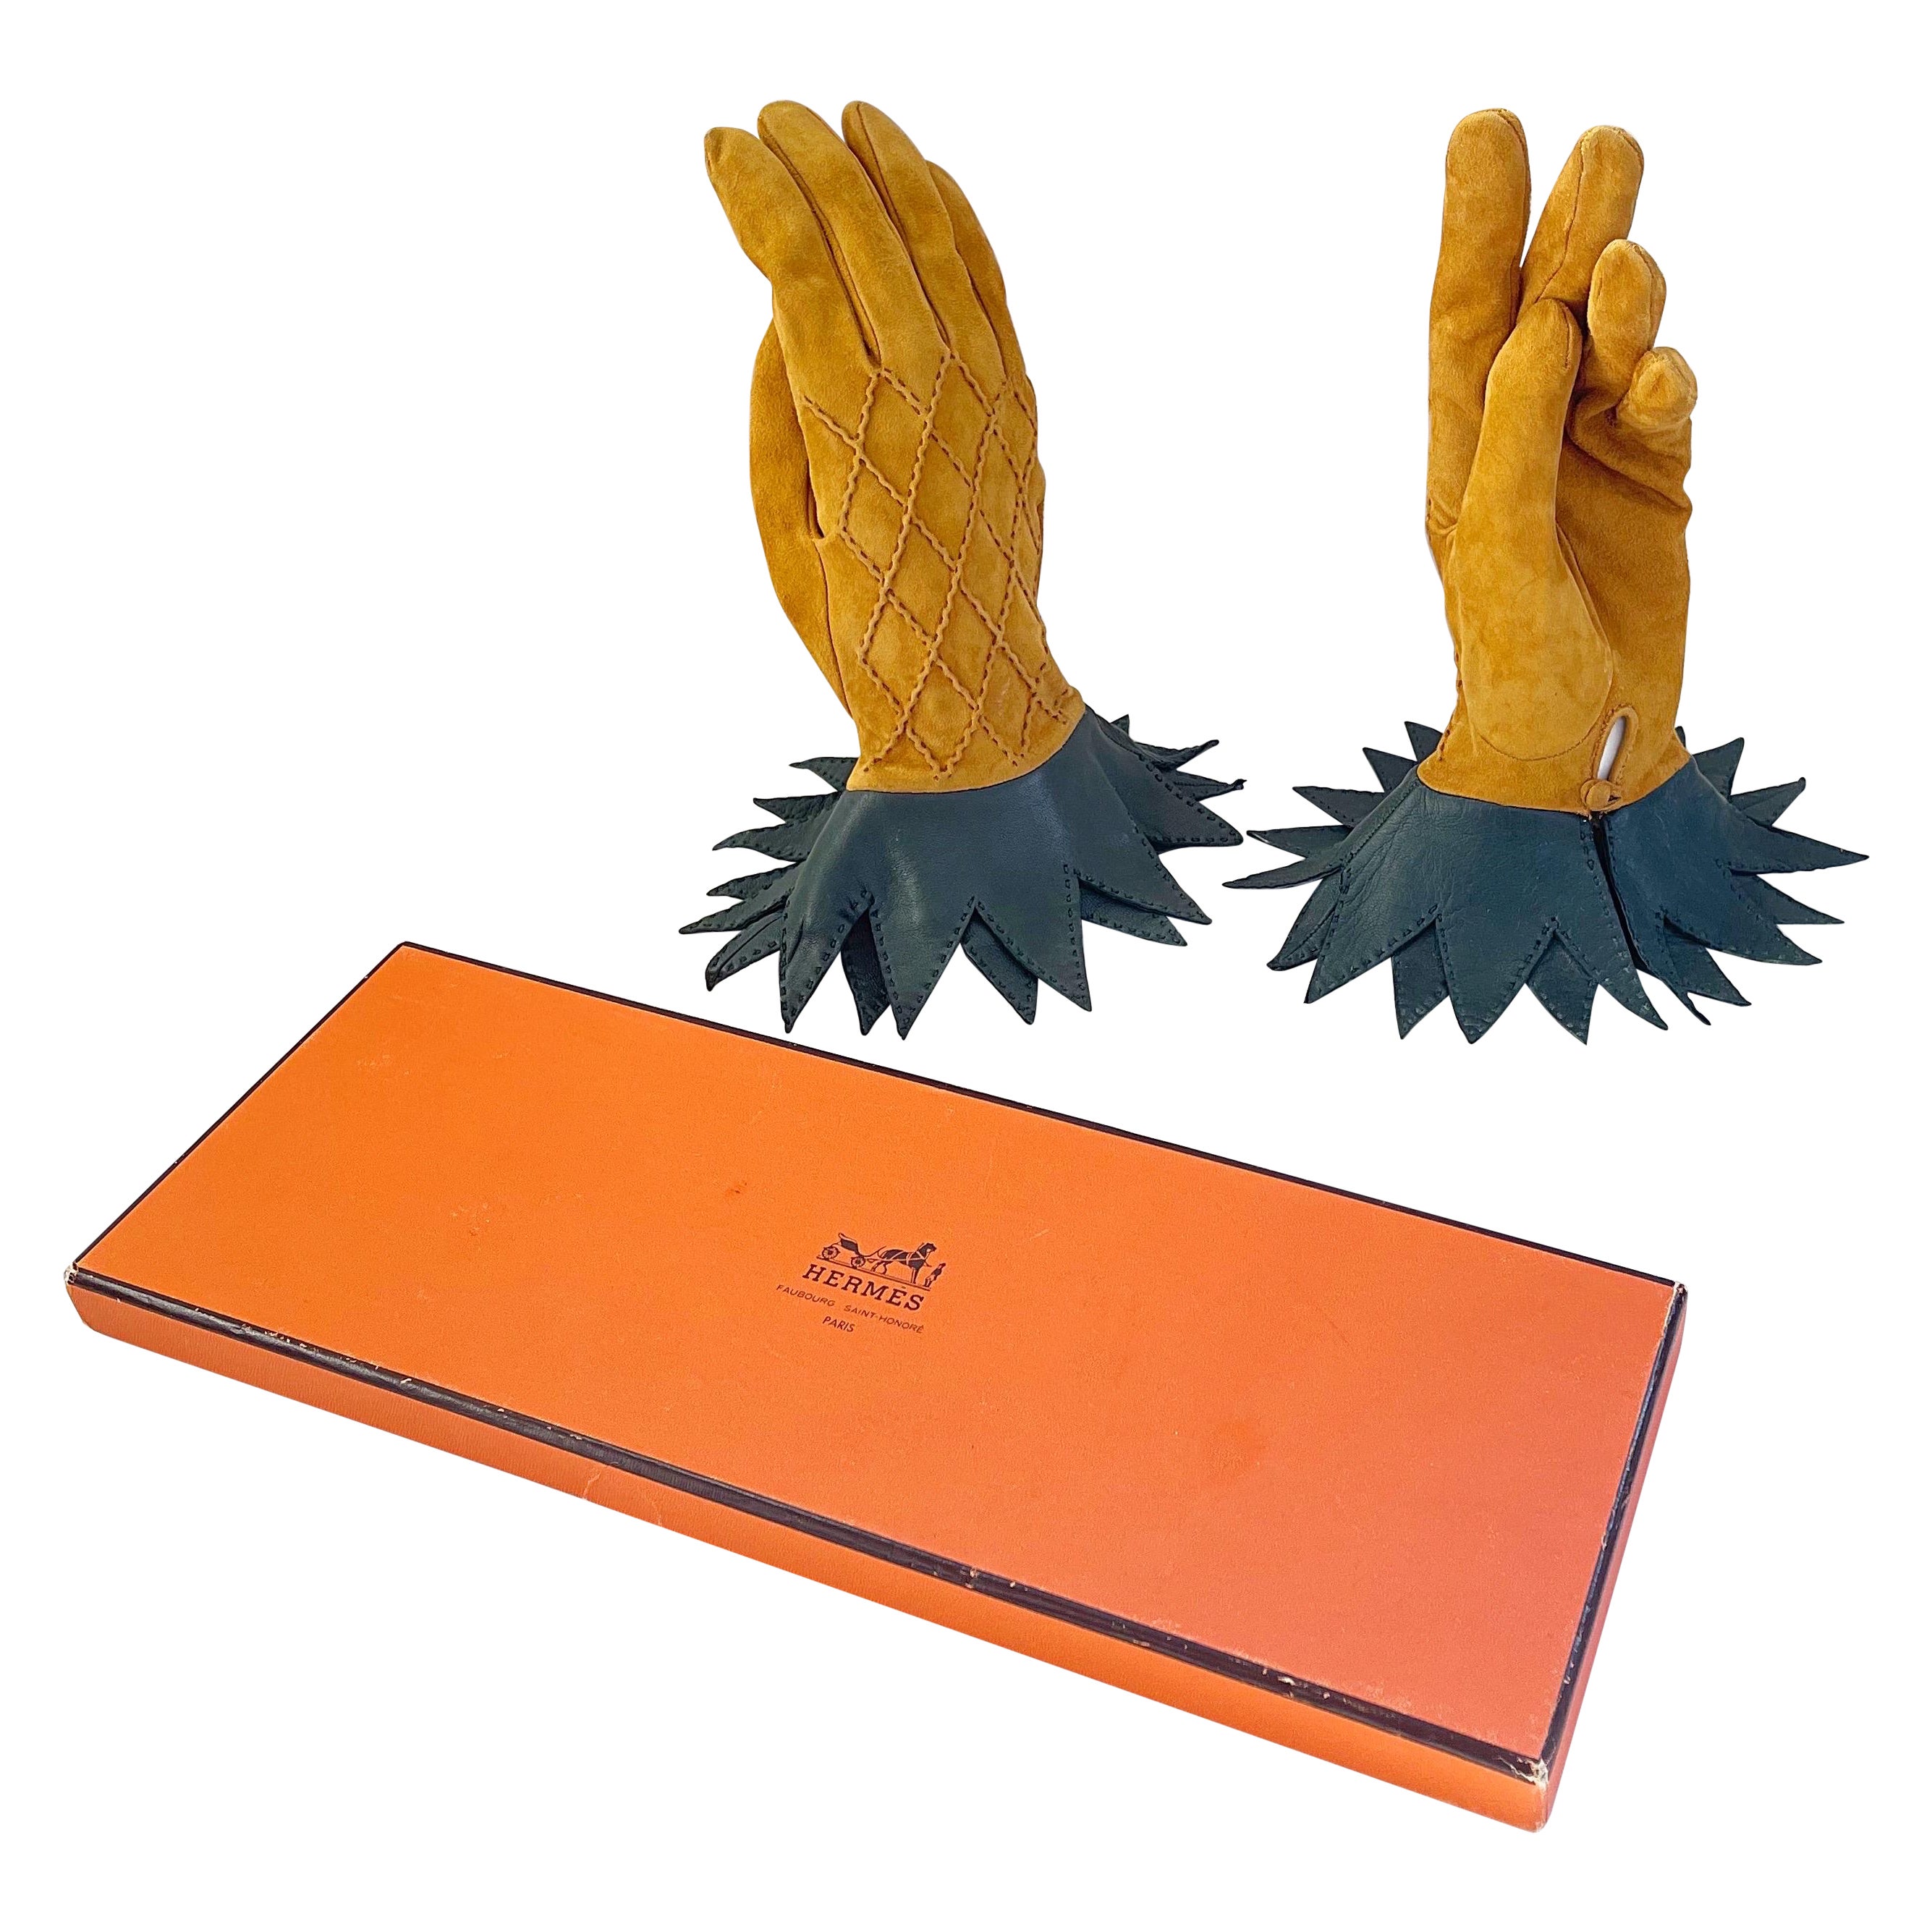 Hermès 1990er Vintage Ananas Neuheit Wildleder Größe 7,5 90er Handschuhe